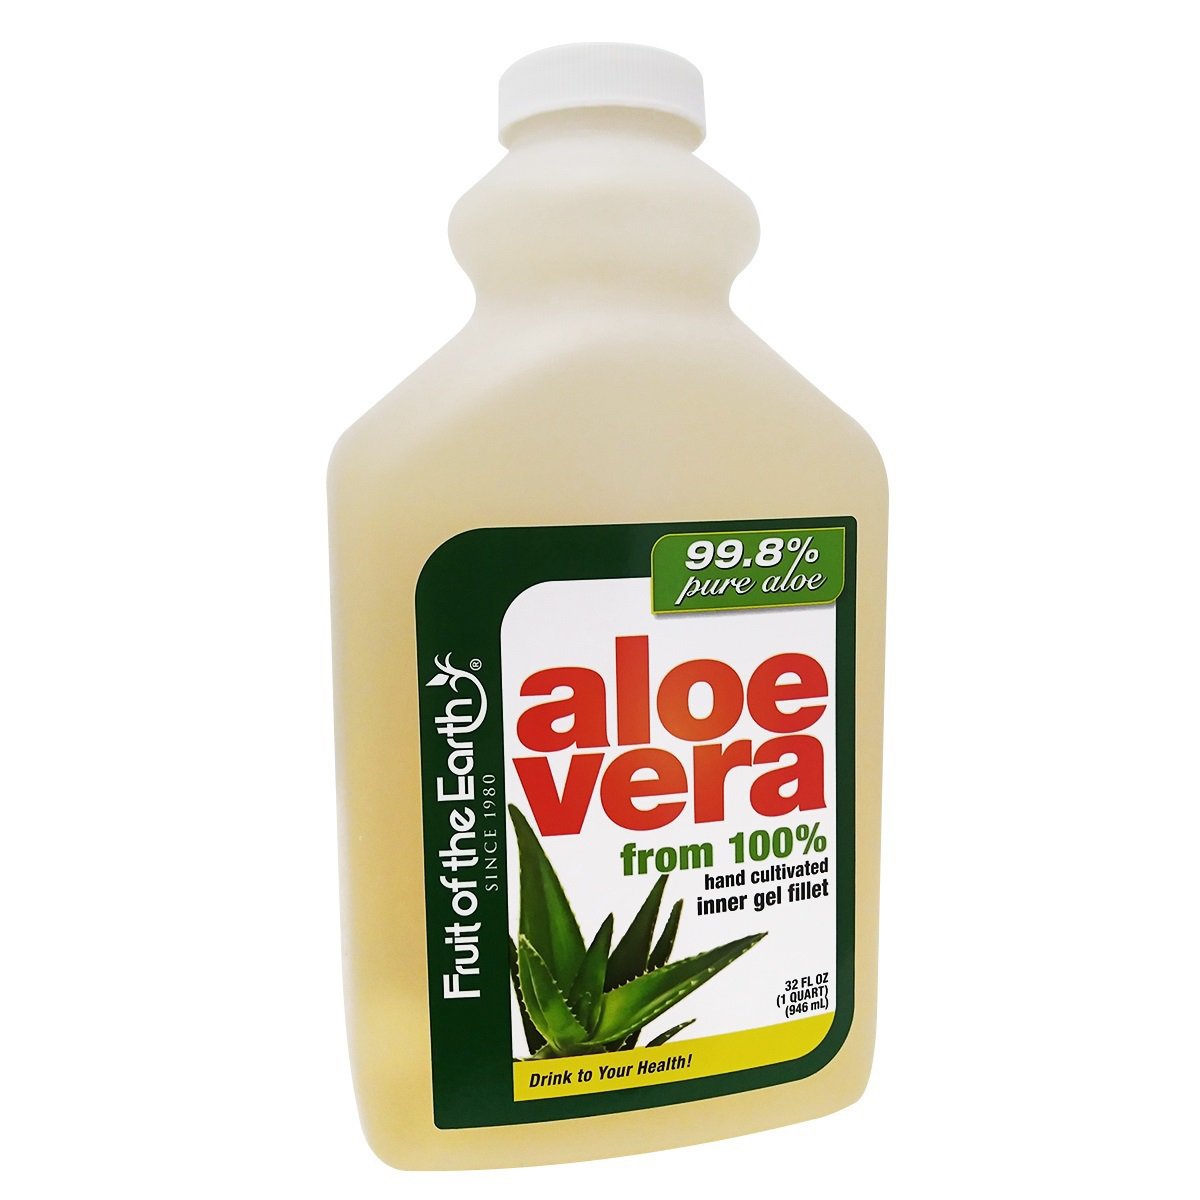 Mod viljen Musling høj Fruit of the Earth 99.8% Aloe Vera Juice - Shop Herbs & Homeopathy at H-E-B